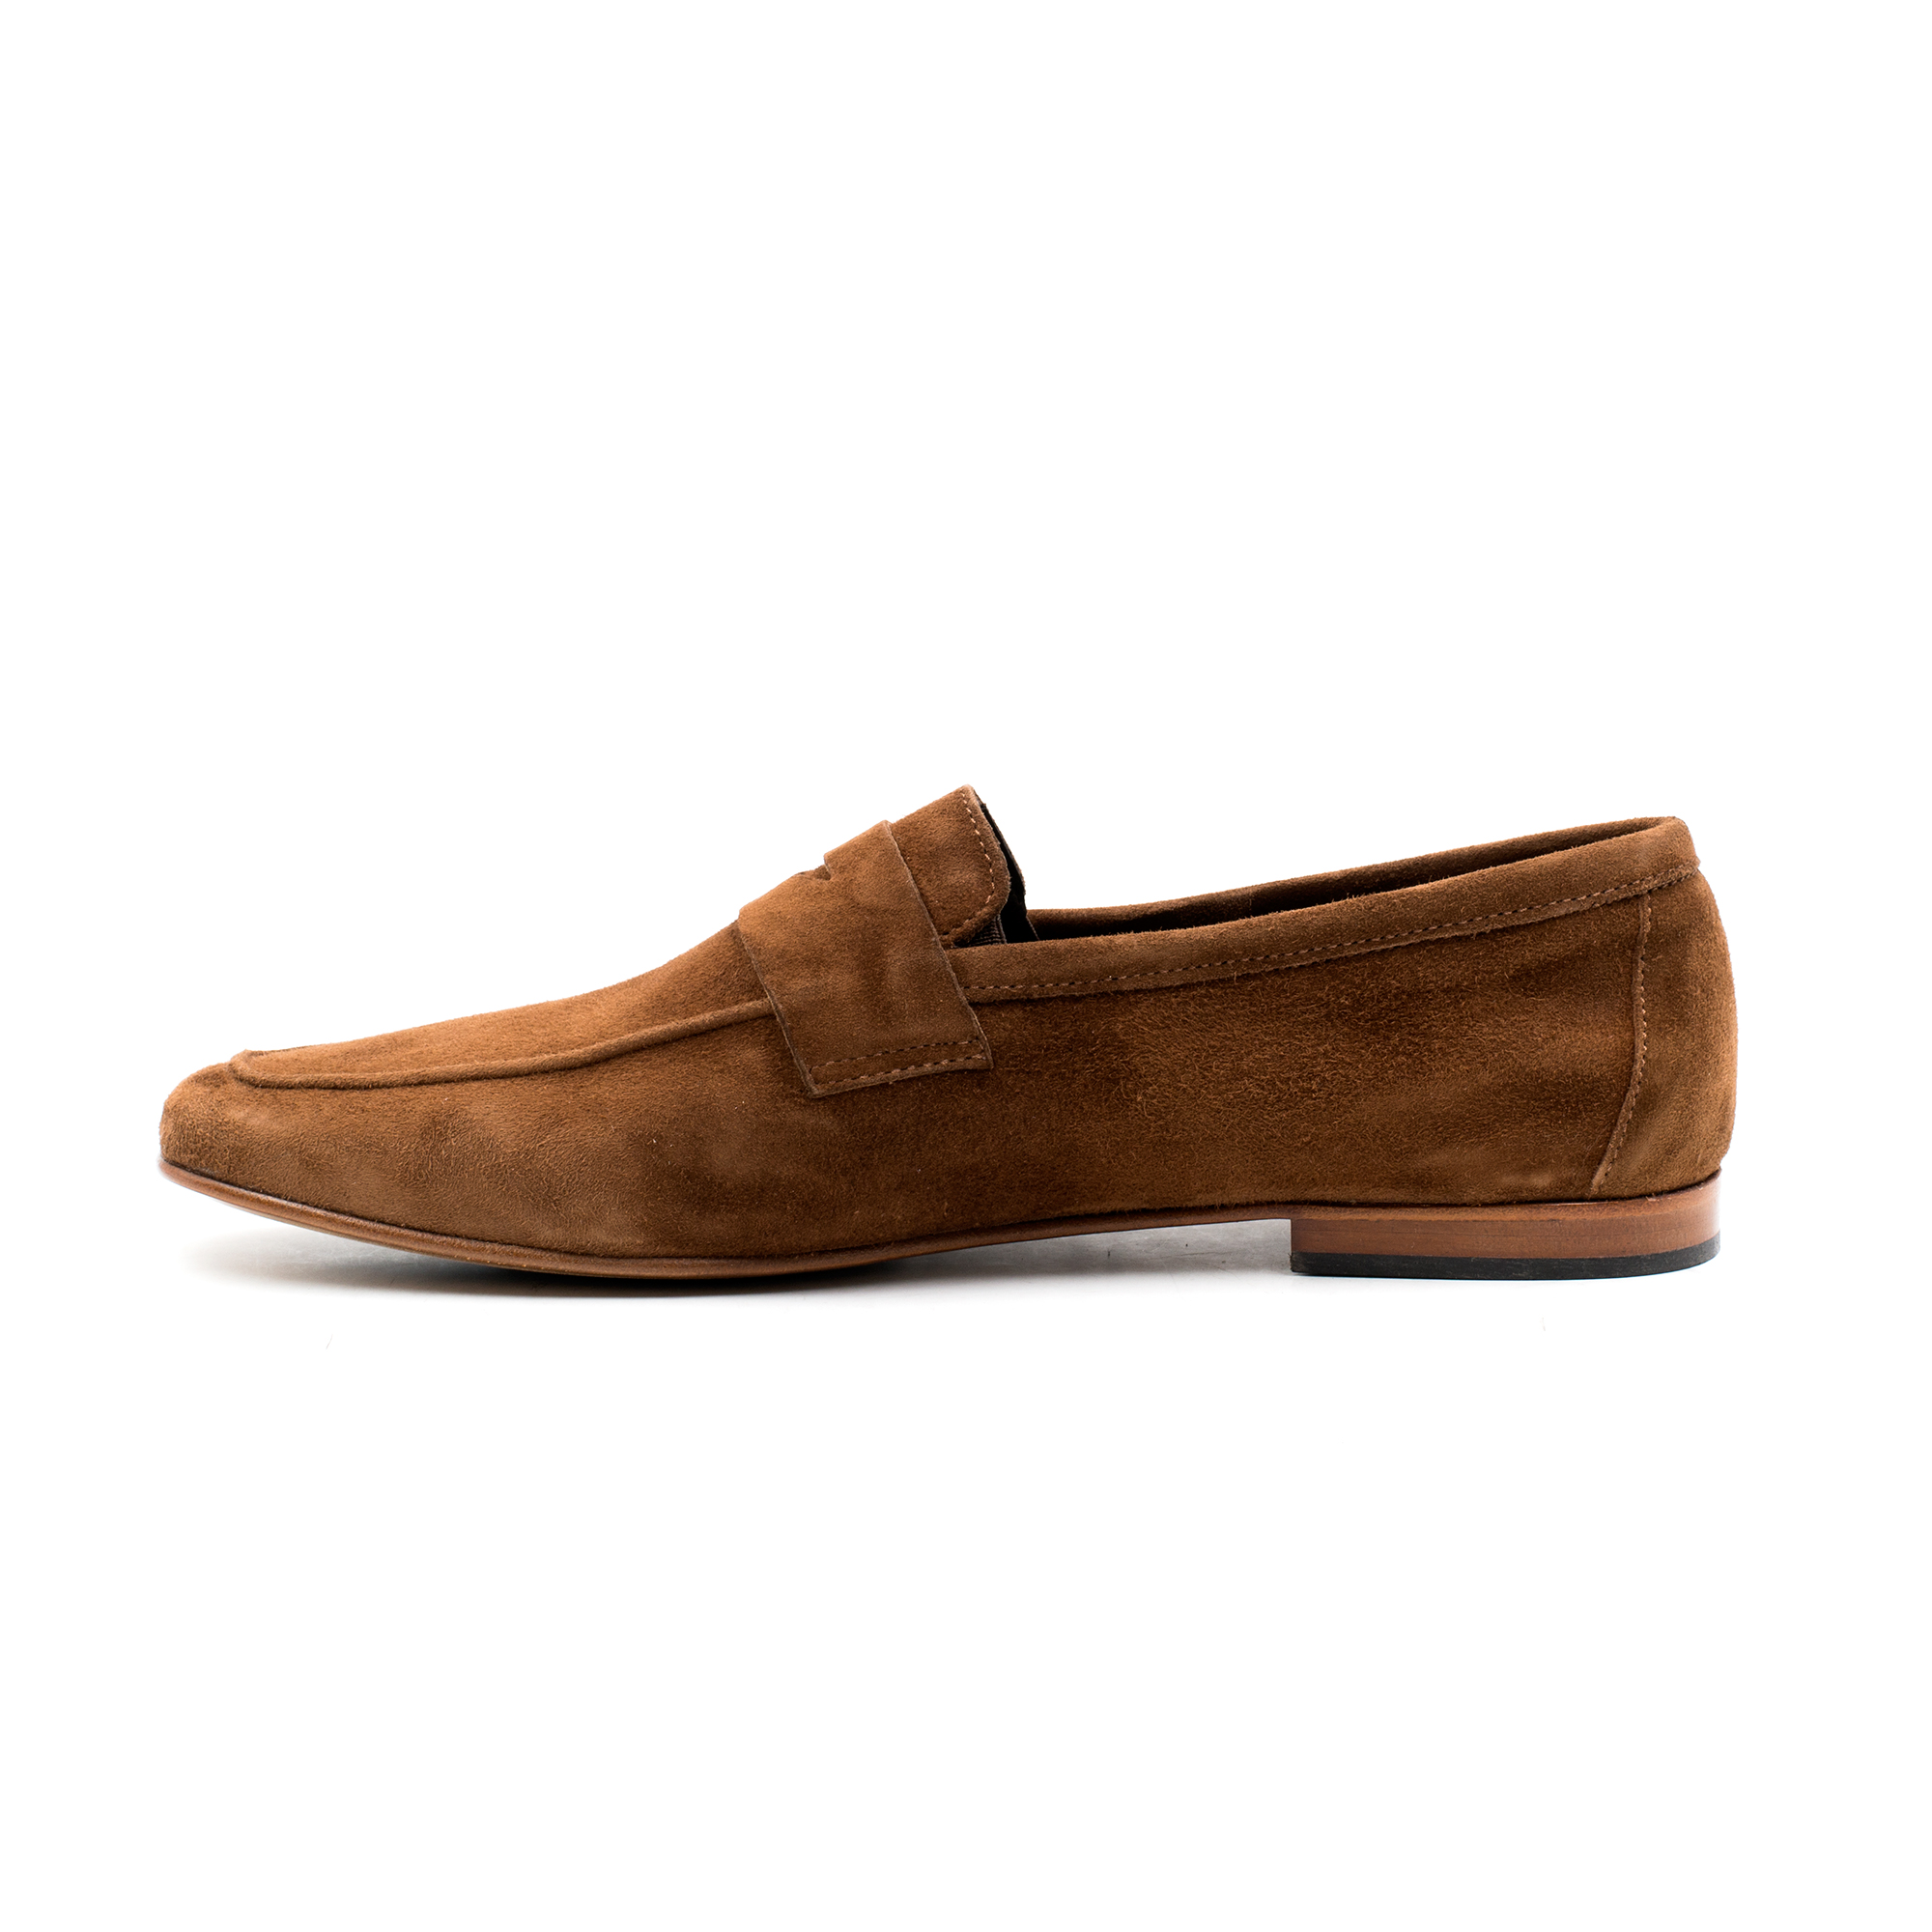 Campo neutro - leather bottom moccasin: online sale on Claros ...